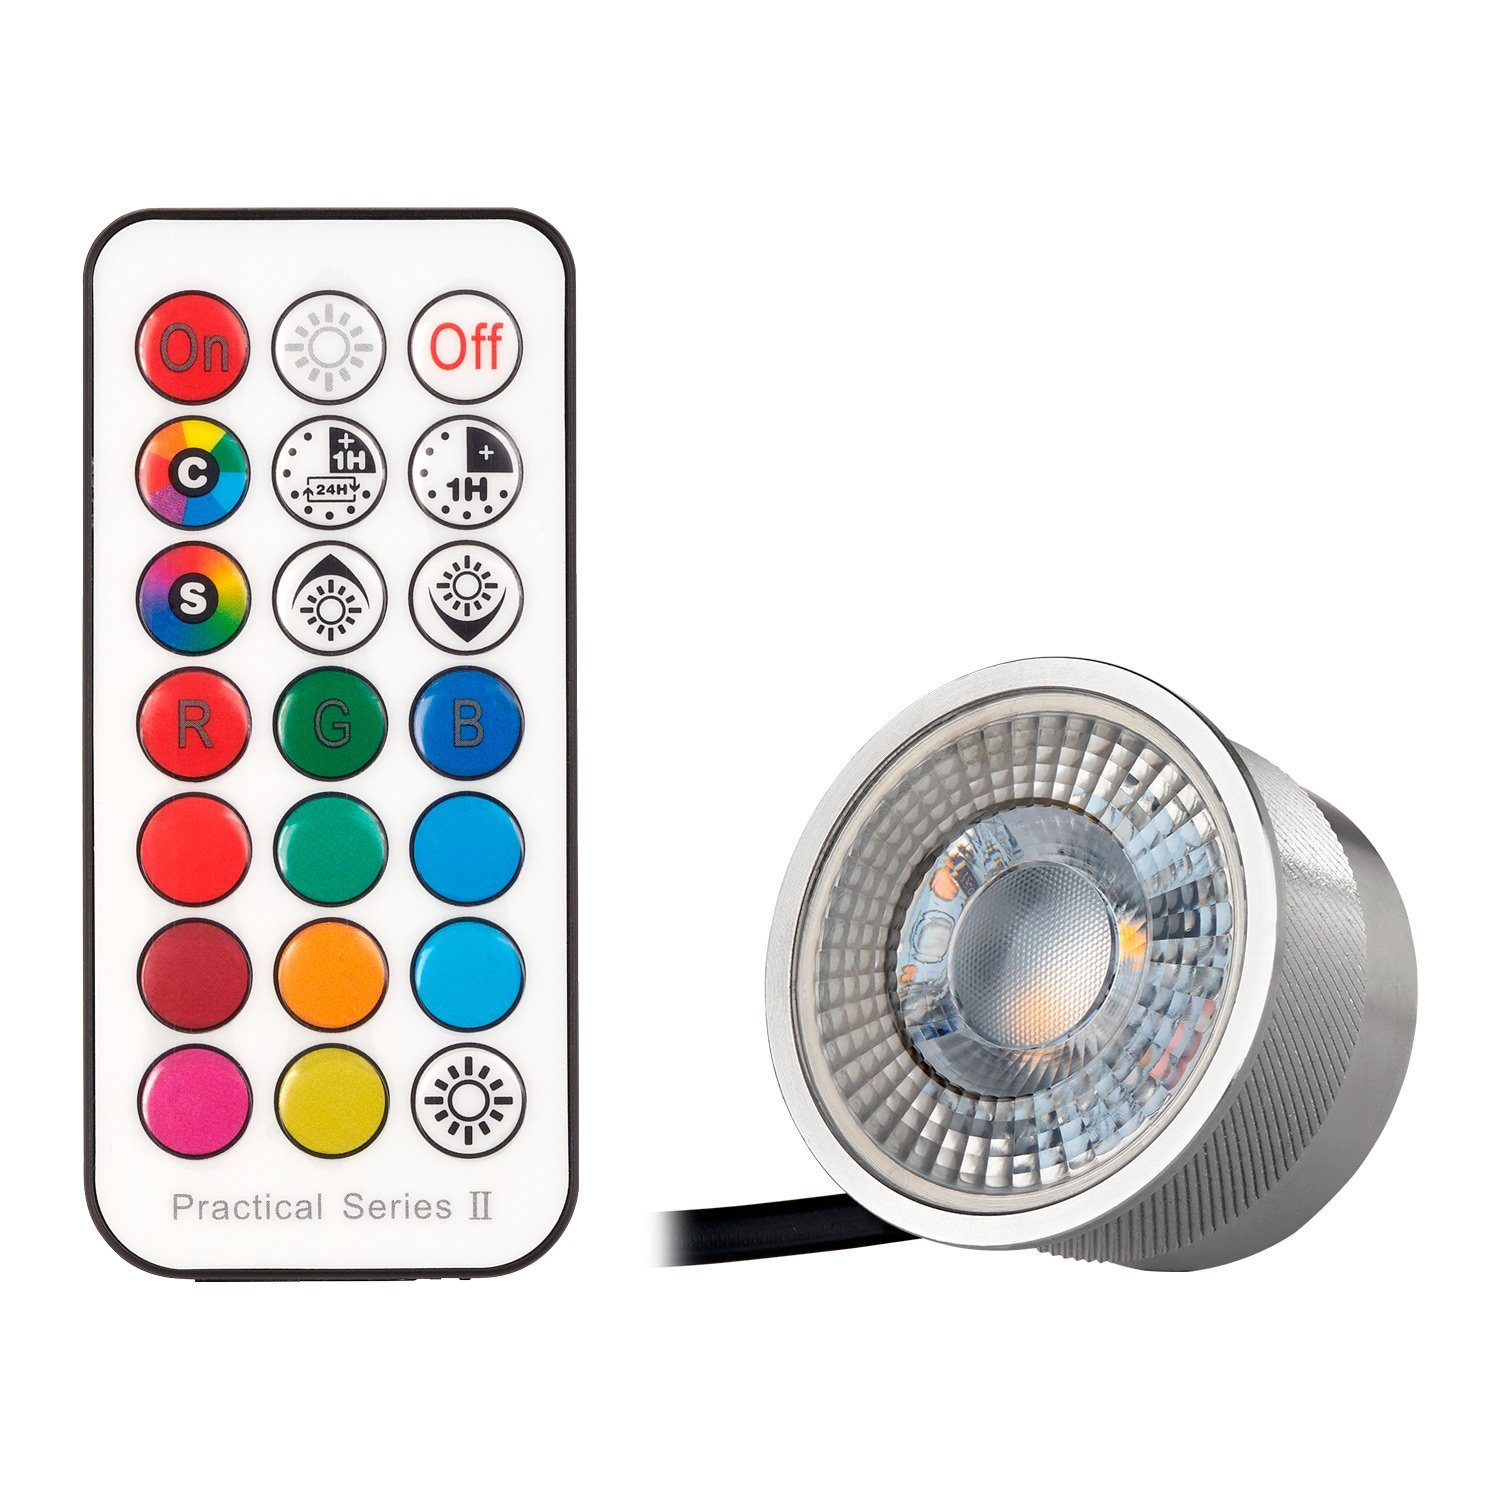 LED Einbaustrahler LED in flach zweifarbig extra - mi Set bicolor LEDANDO 10er RGB Einbaustrahler